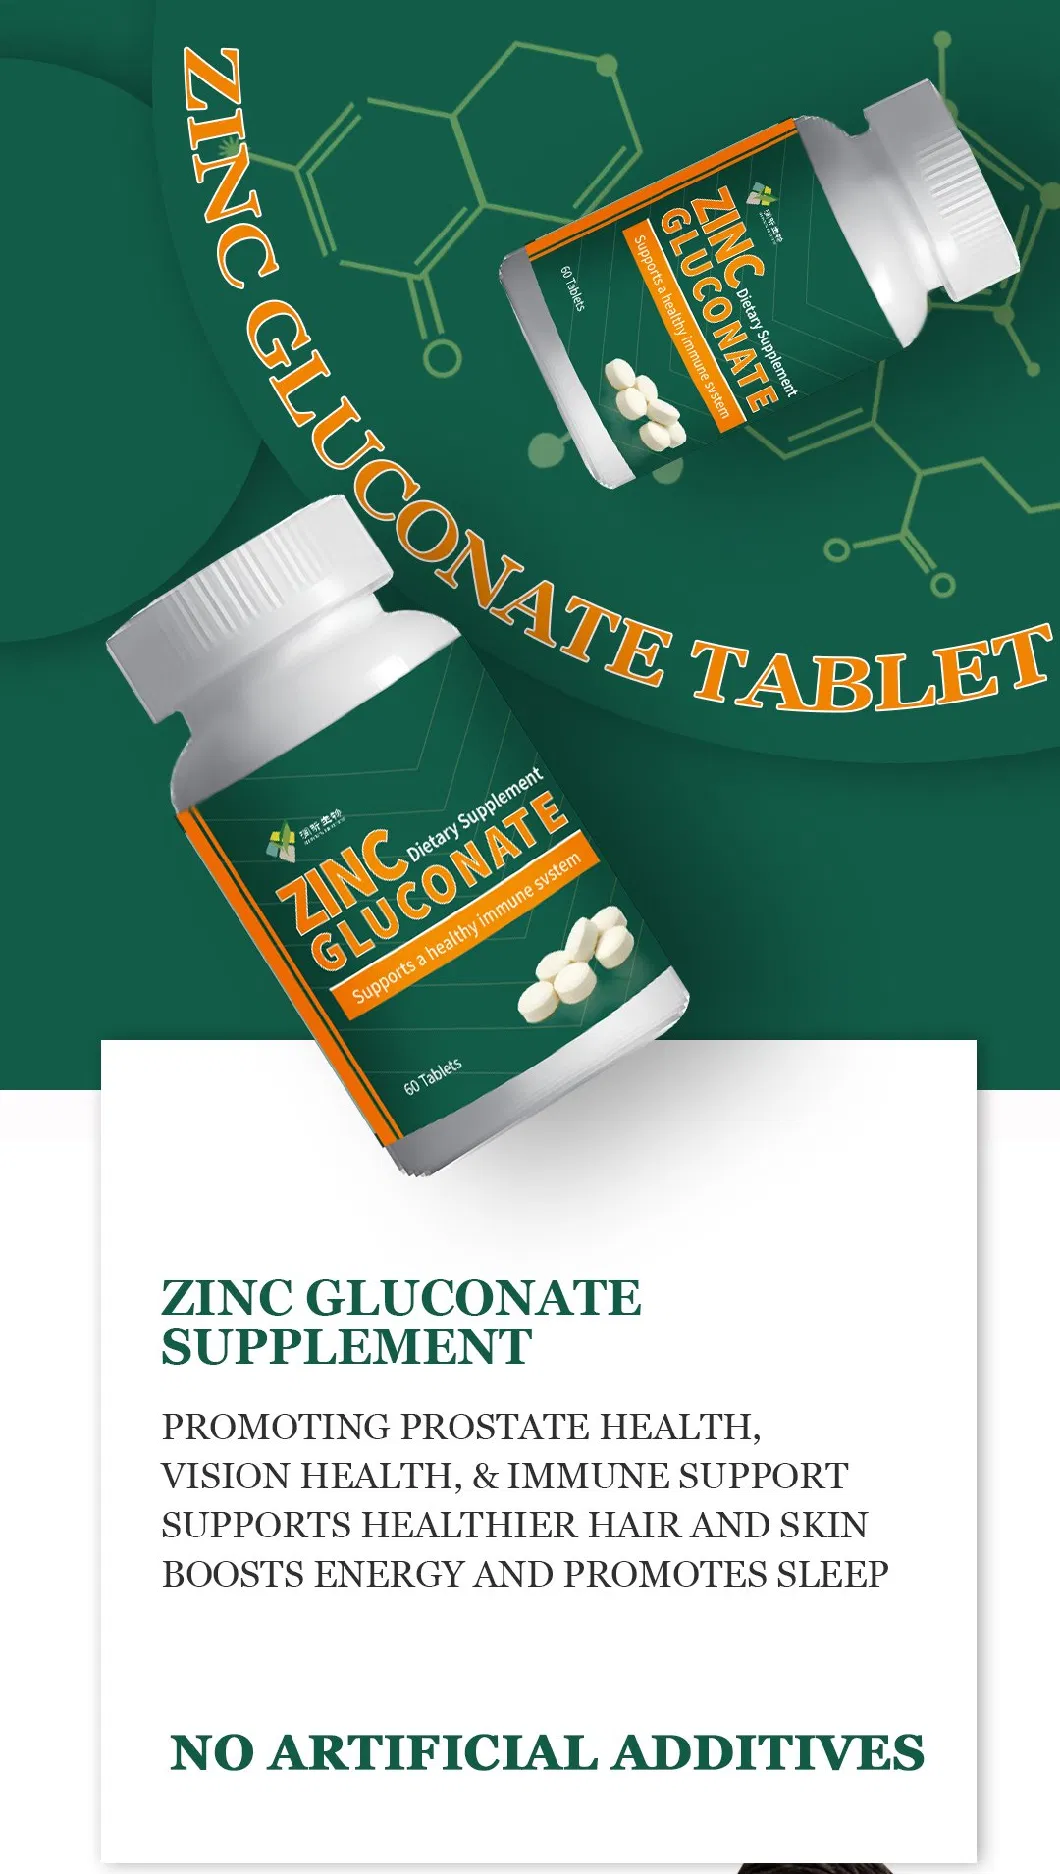 Gluten Free Sugar Free Promote Immunity Health 25mg Zinc Gluconate Tablets Zinc Supplement